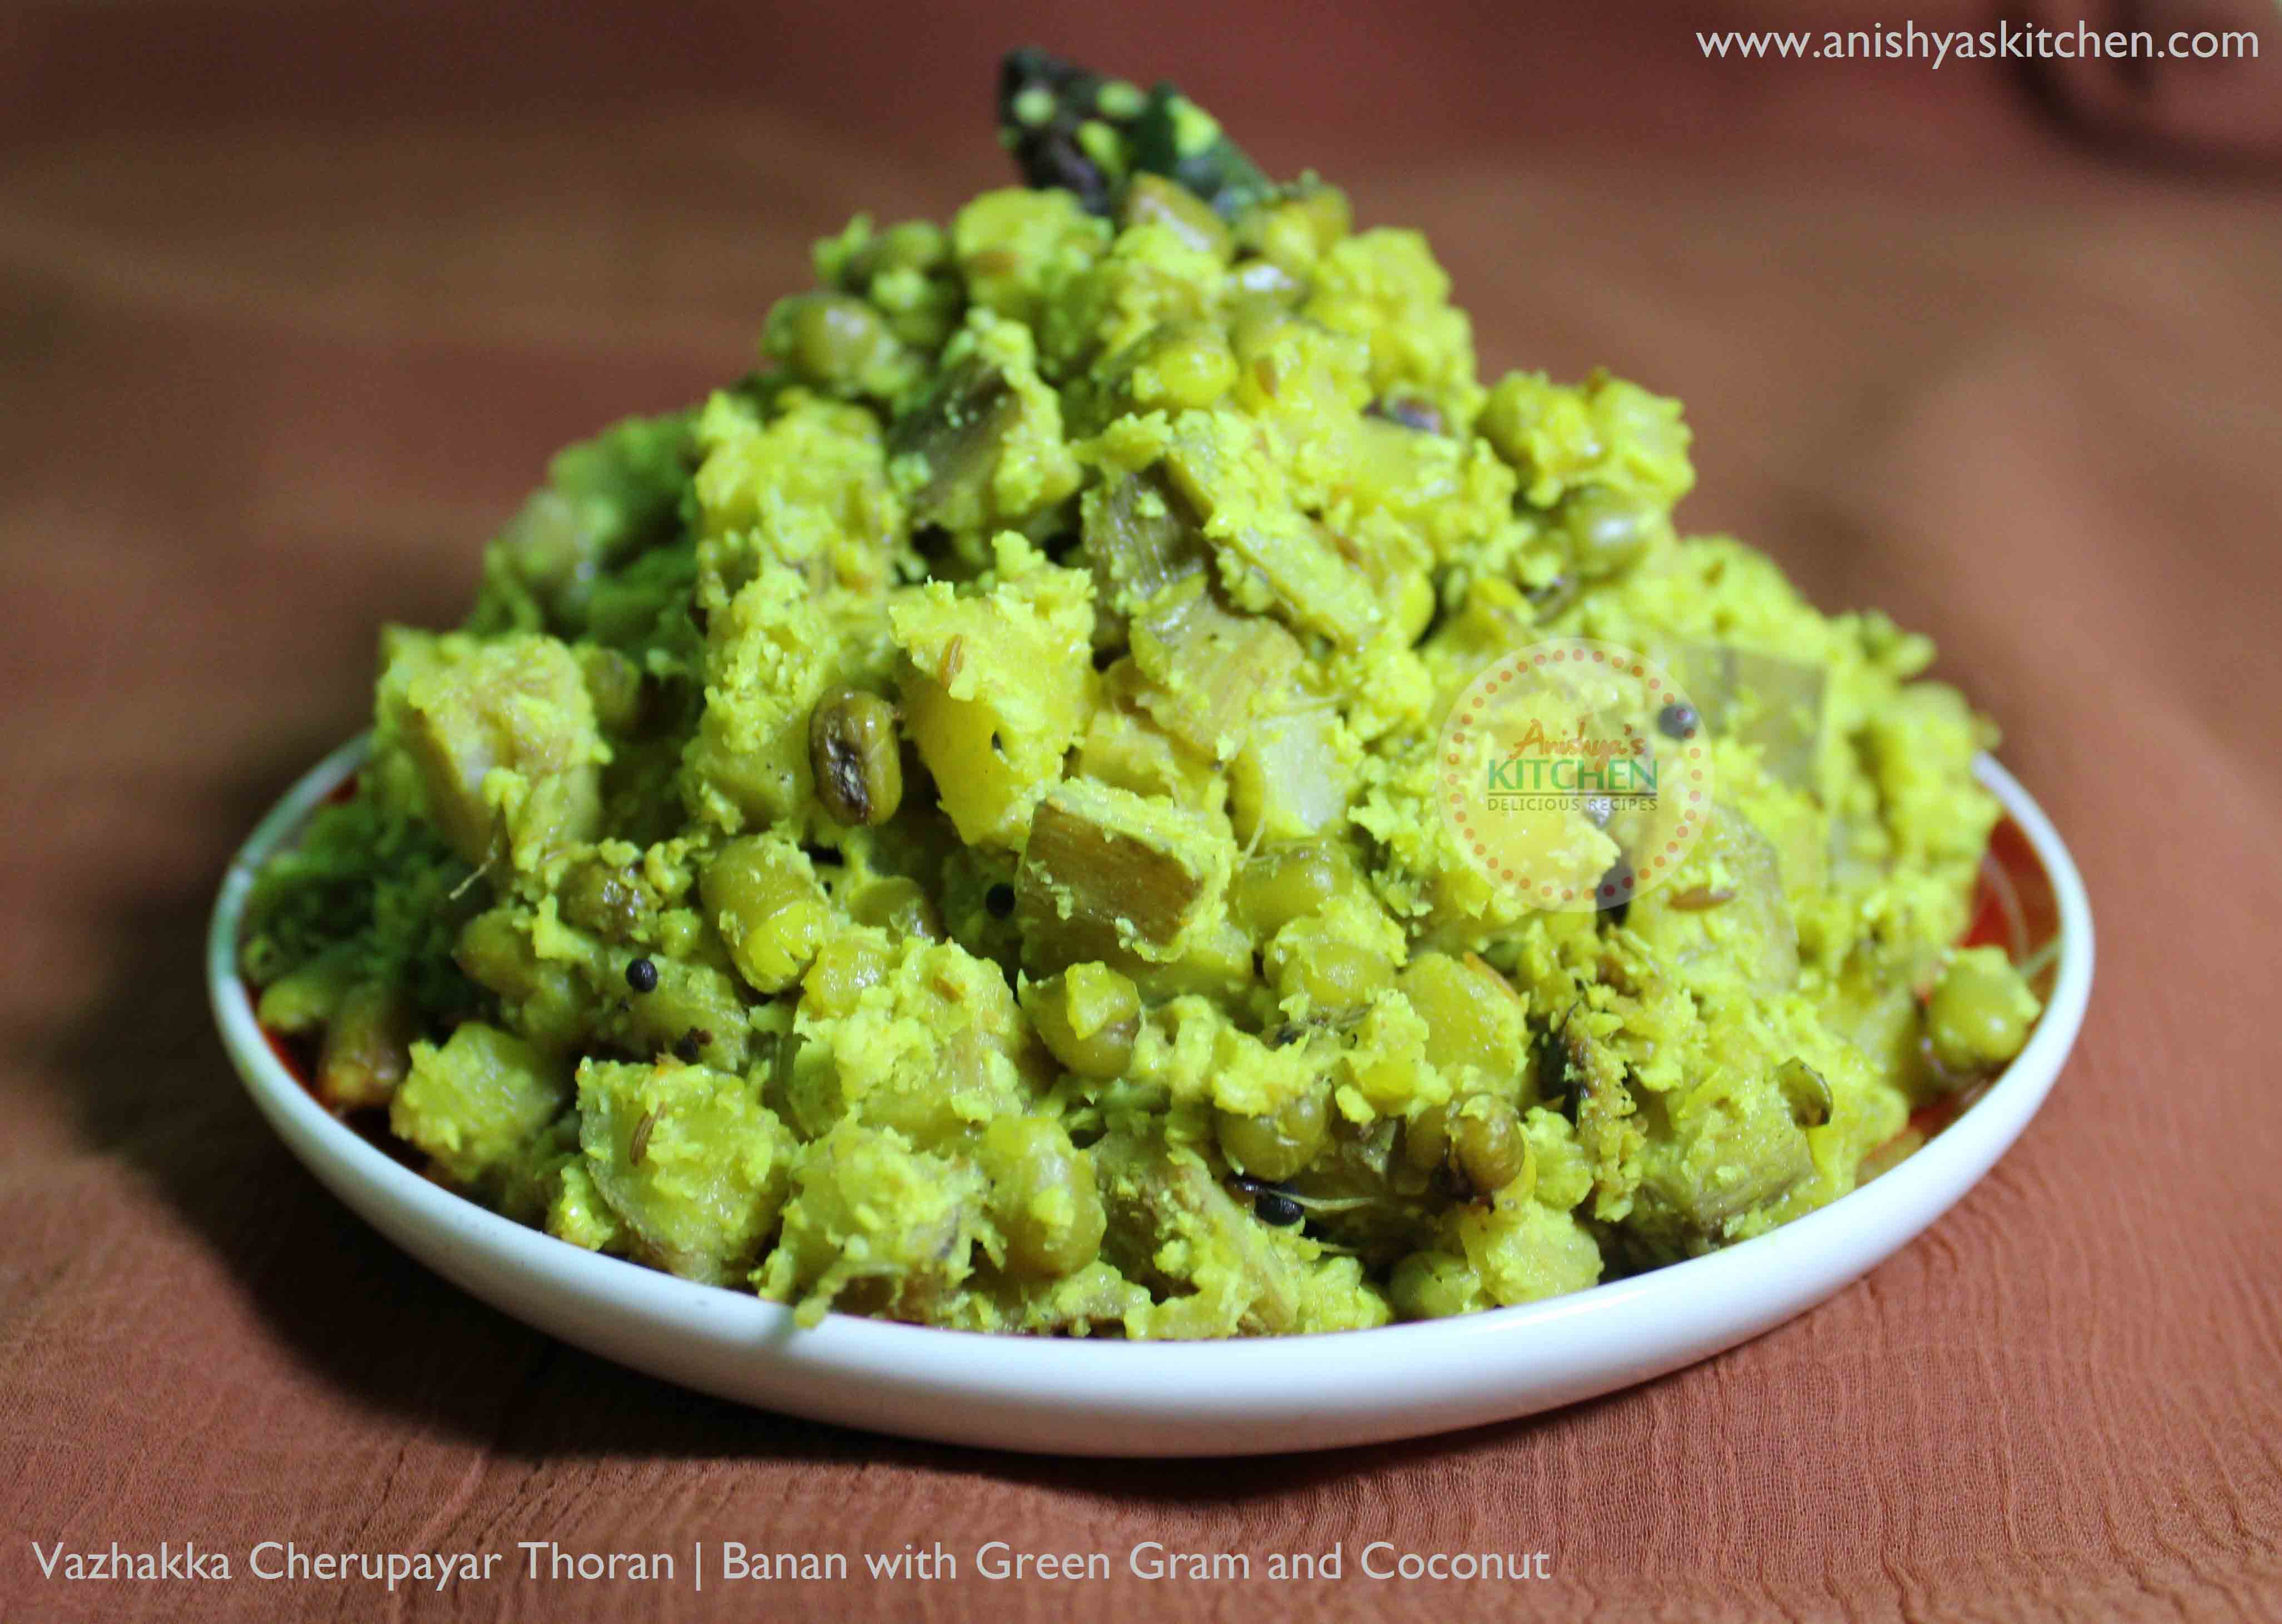 Kerala Style Vazhaykka Cherupayar Thoran Raw Banana With Green Gram And Coconut Anishyas Kitchen